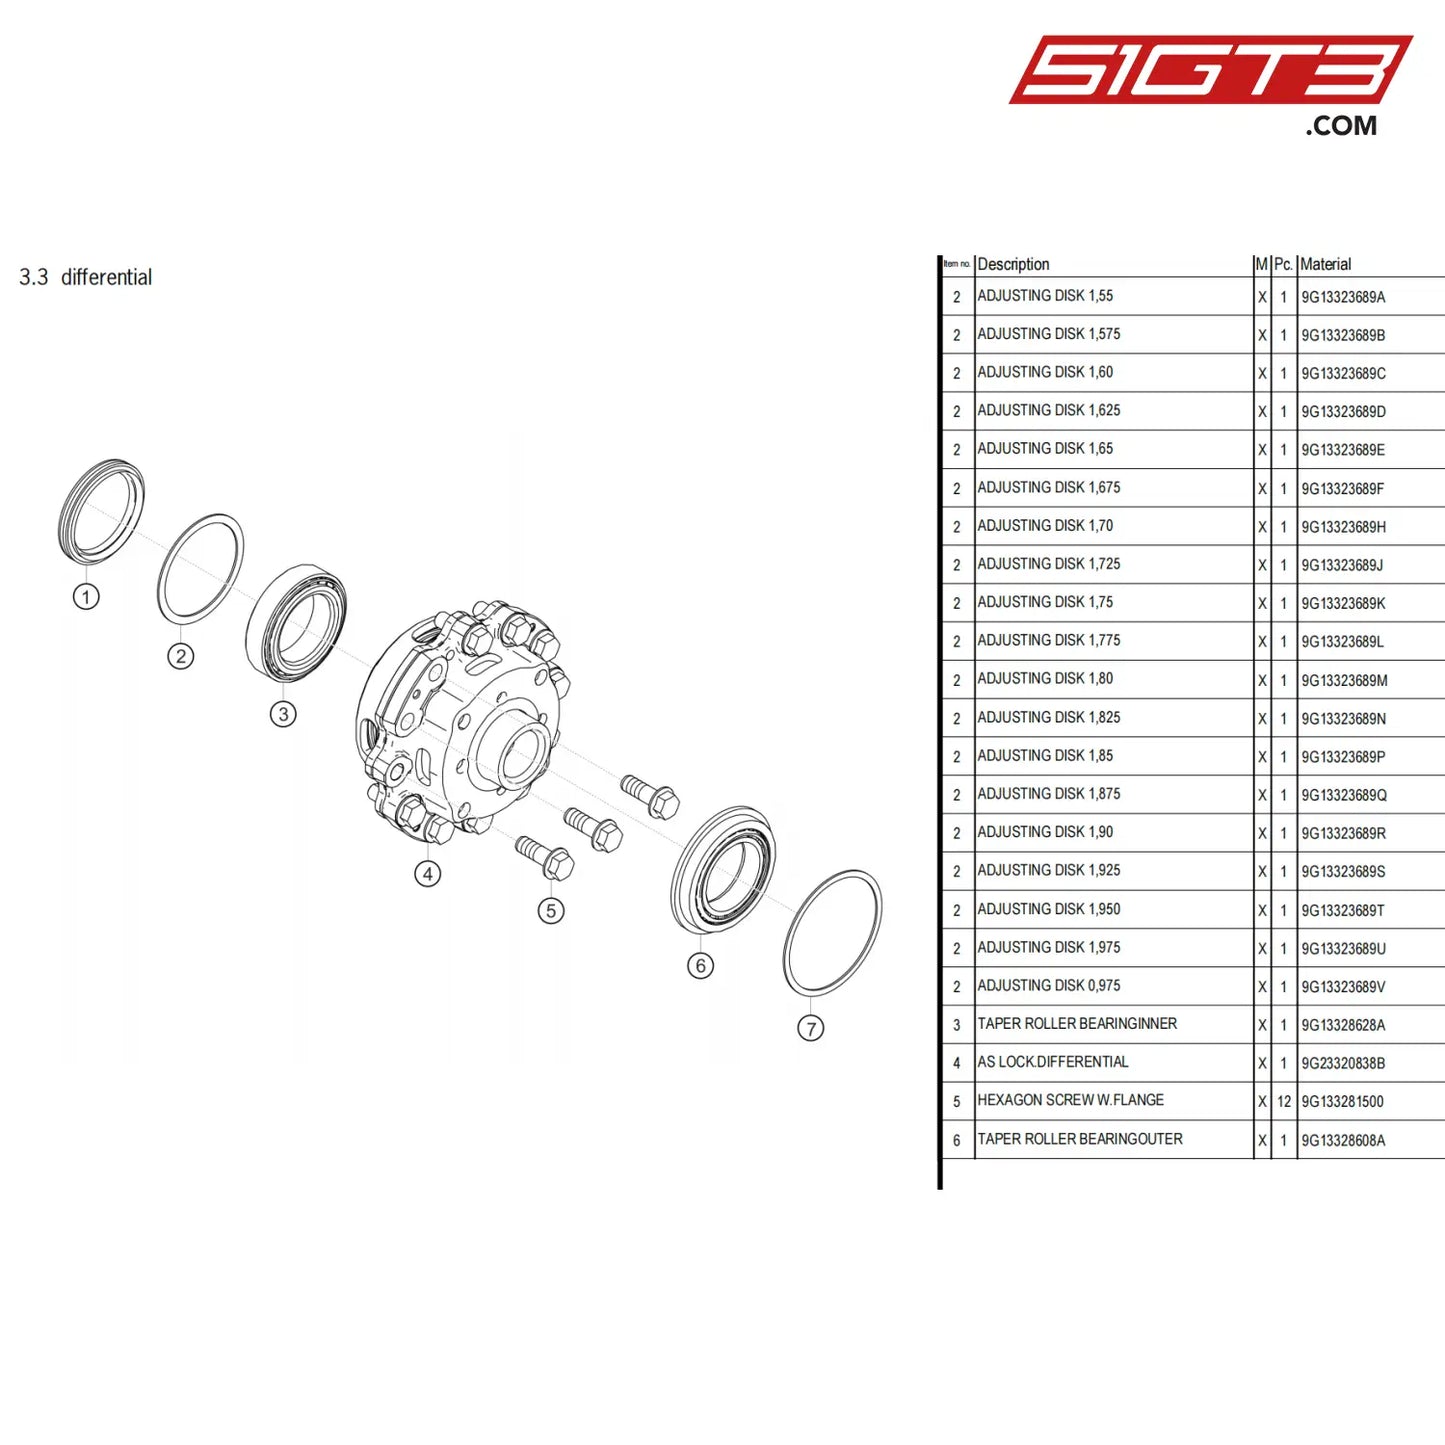 Adjusting Disk 1 450 - 9G13323668N [Porsche 718 Cayman Gt4 Clubsport] Differential